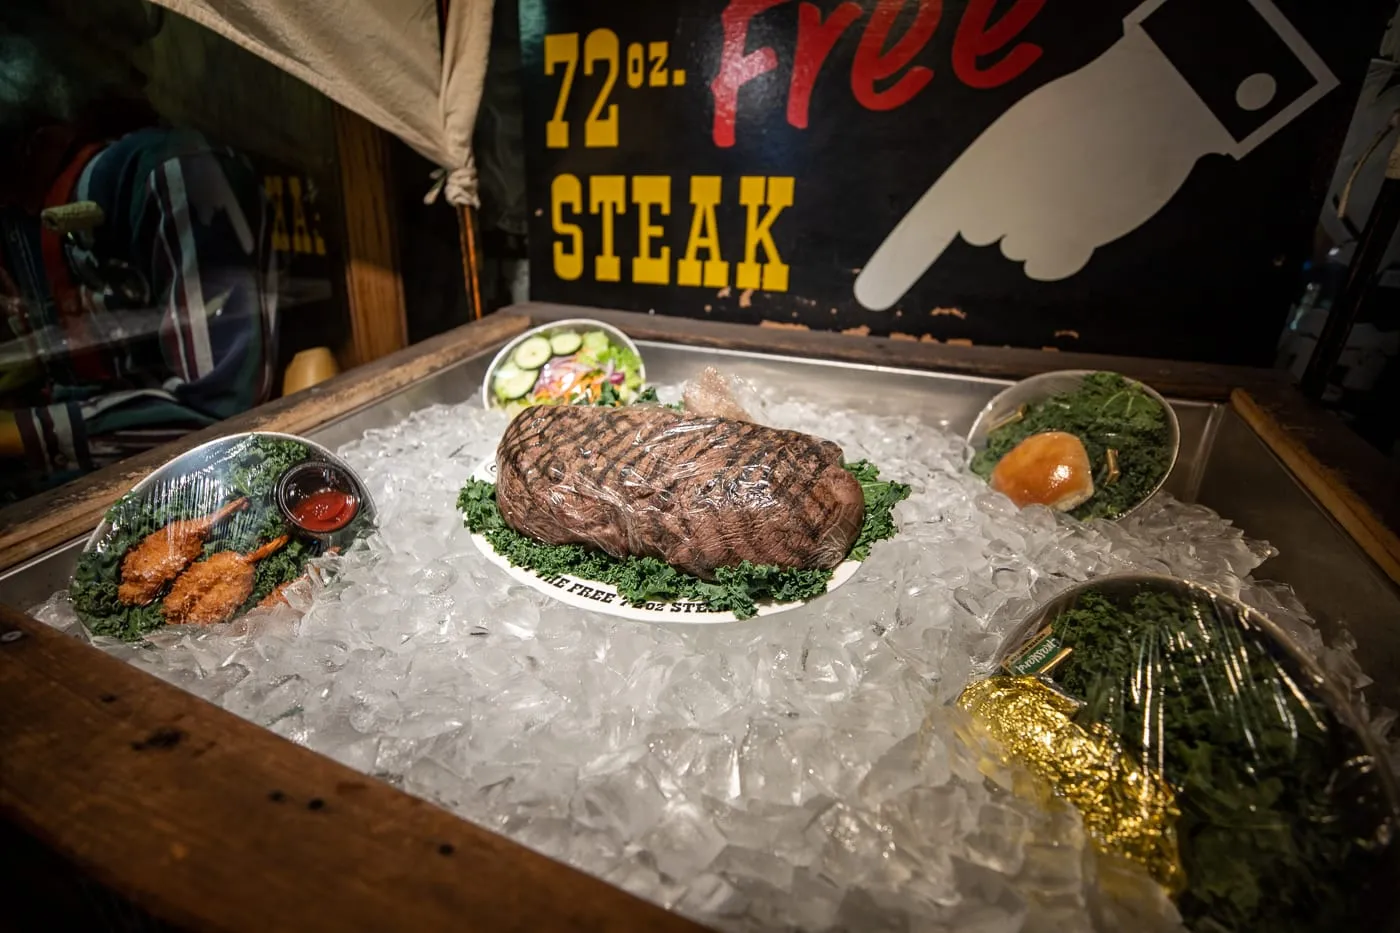 Free 72oz Steak Challenge at The Big Texan Steak Ranch in Amarillo, Texas